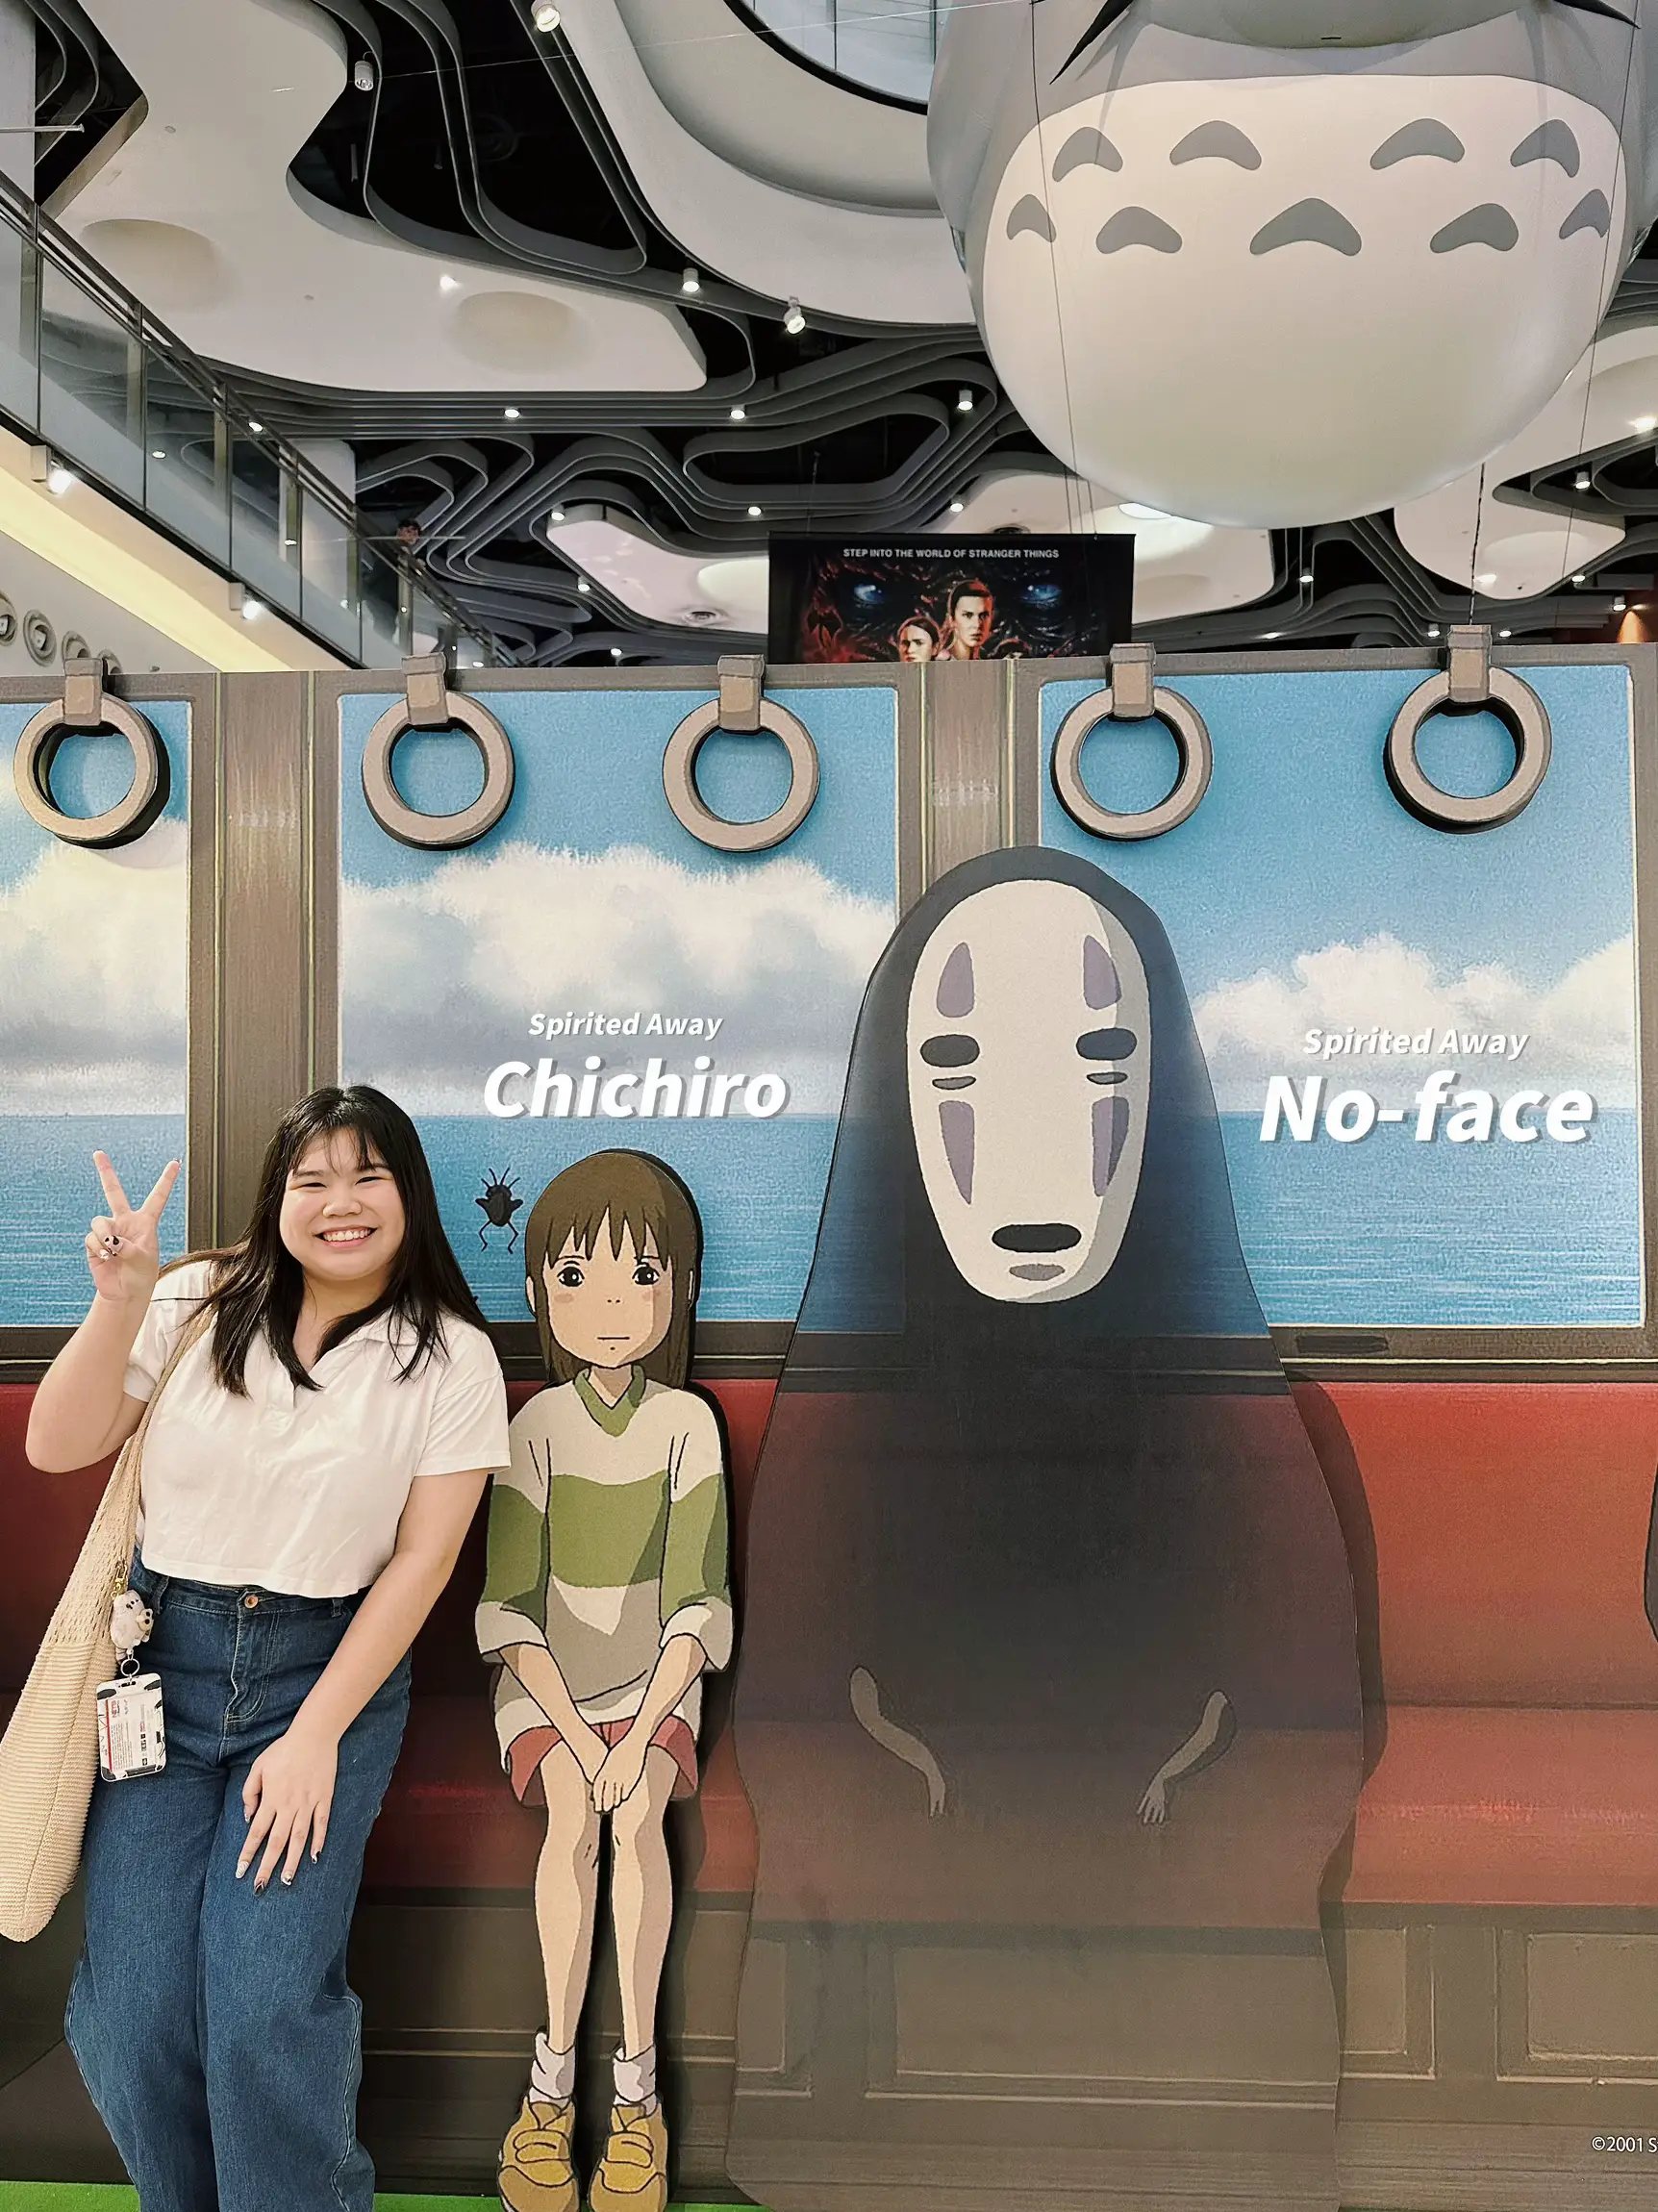 My top 8 Studio Ghibli Movies, Gallery posted by MeHanneof